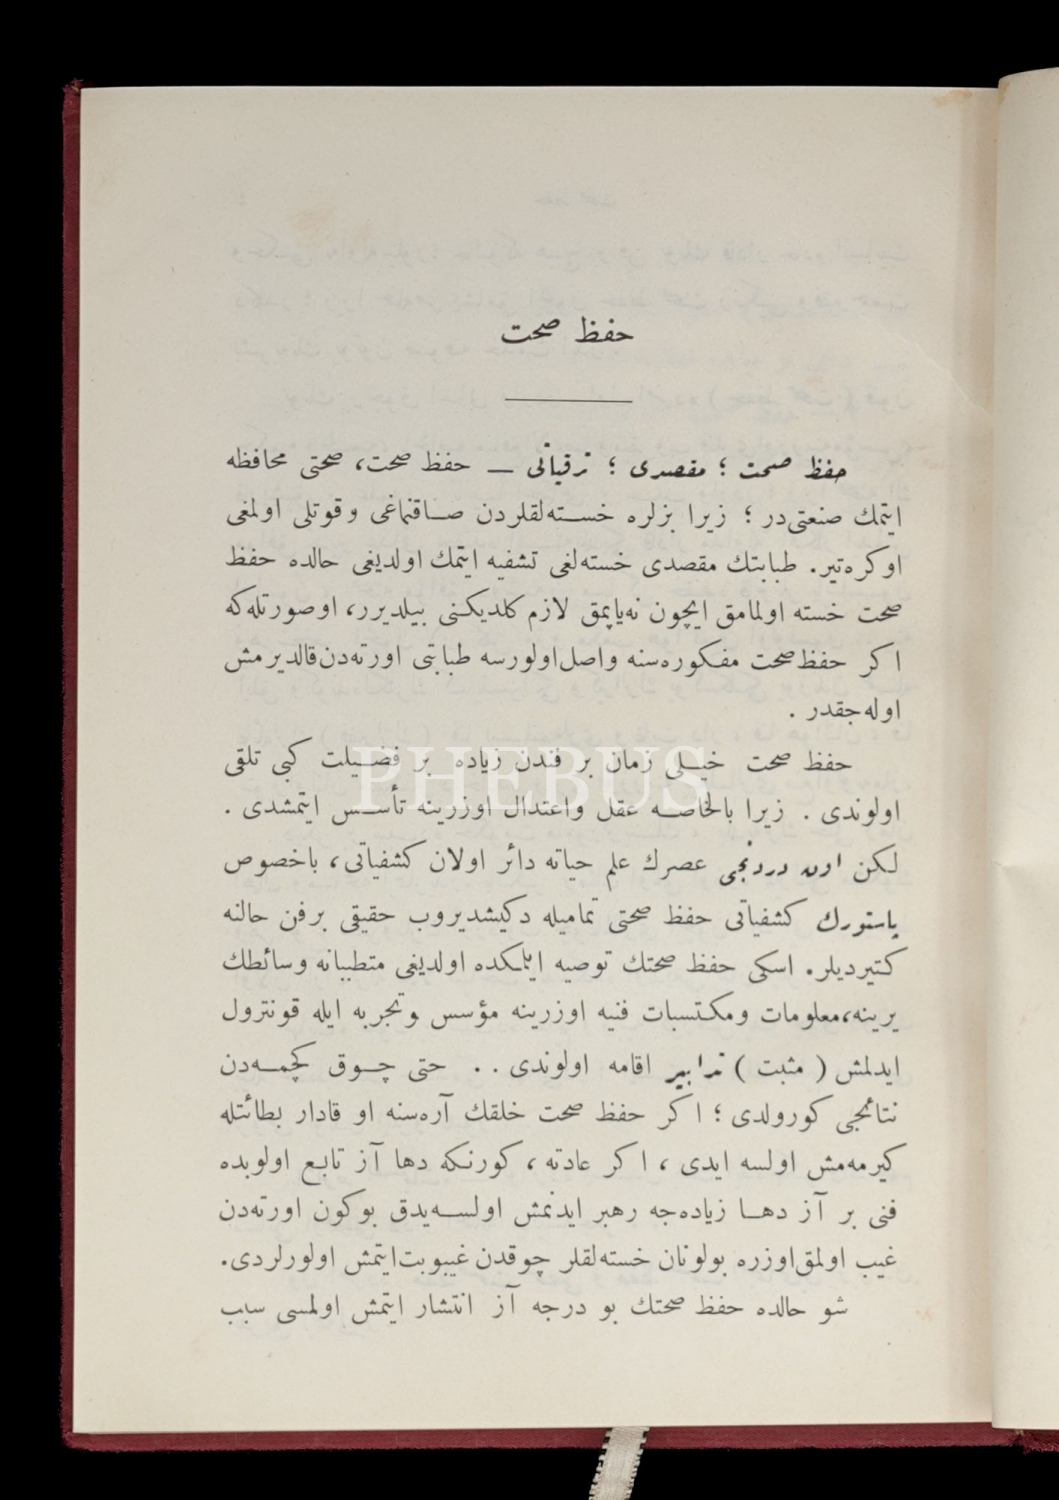 HIFZI´S-SIHHAT, Mehmed Fahri Paşa, 1331, Matbaa-i Amire, 232 sayfa, 14x20 cm...